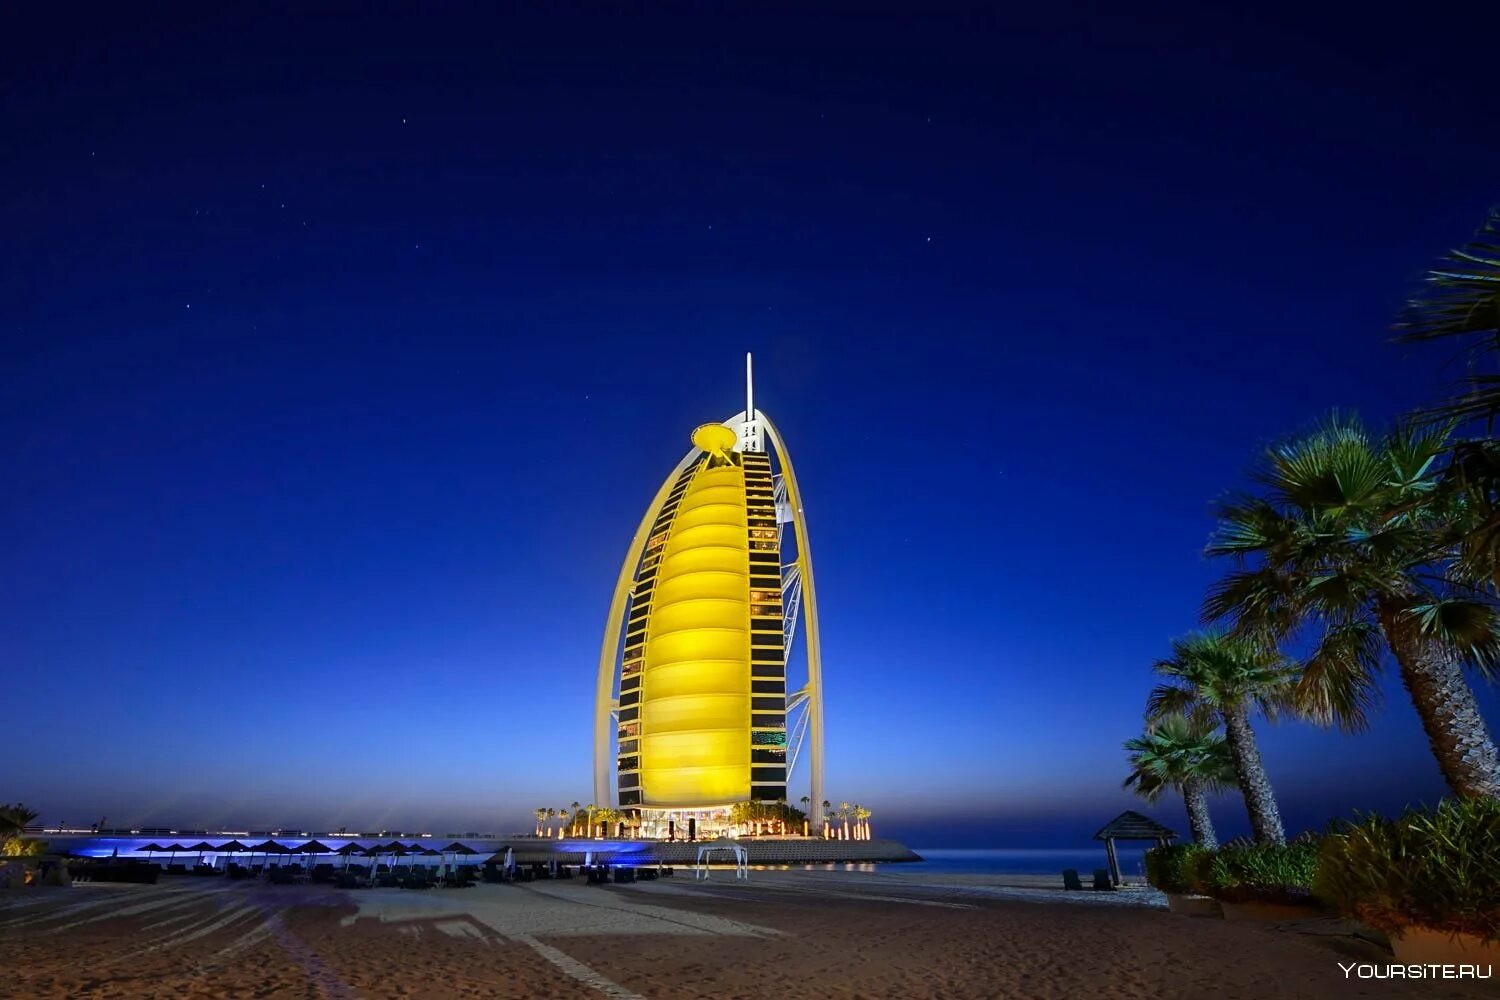 Бурдж аль араб. Отель Бурдж-Эль-араб, Дубаи. Отель Парус в Дубае. Отель Бурдж-Эль-араб («арабская башня») в Дубае, ОАЭ. Гостиница Парус Дубай.